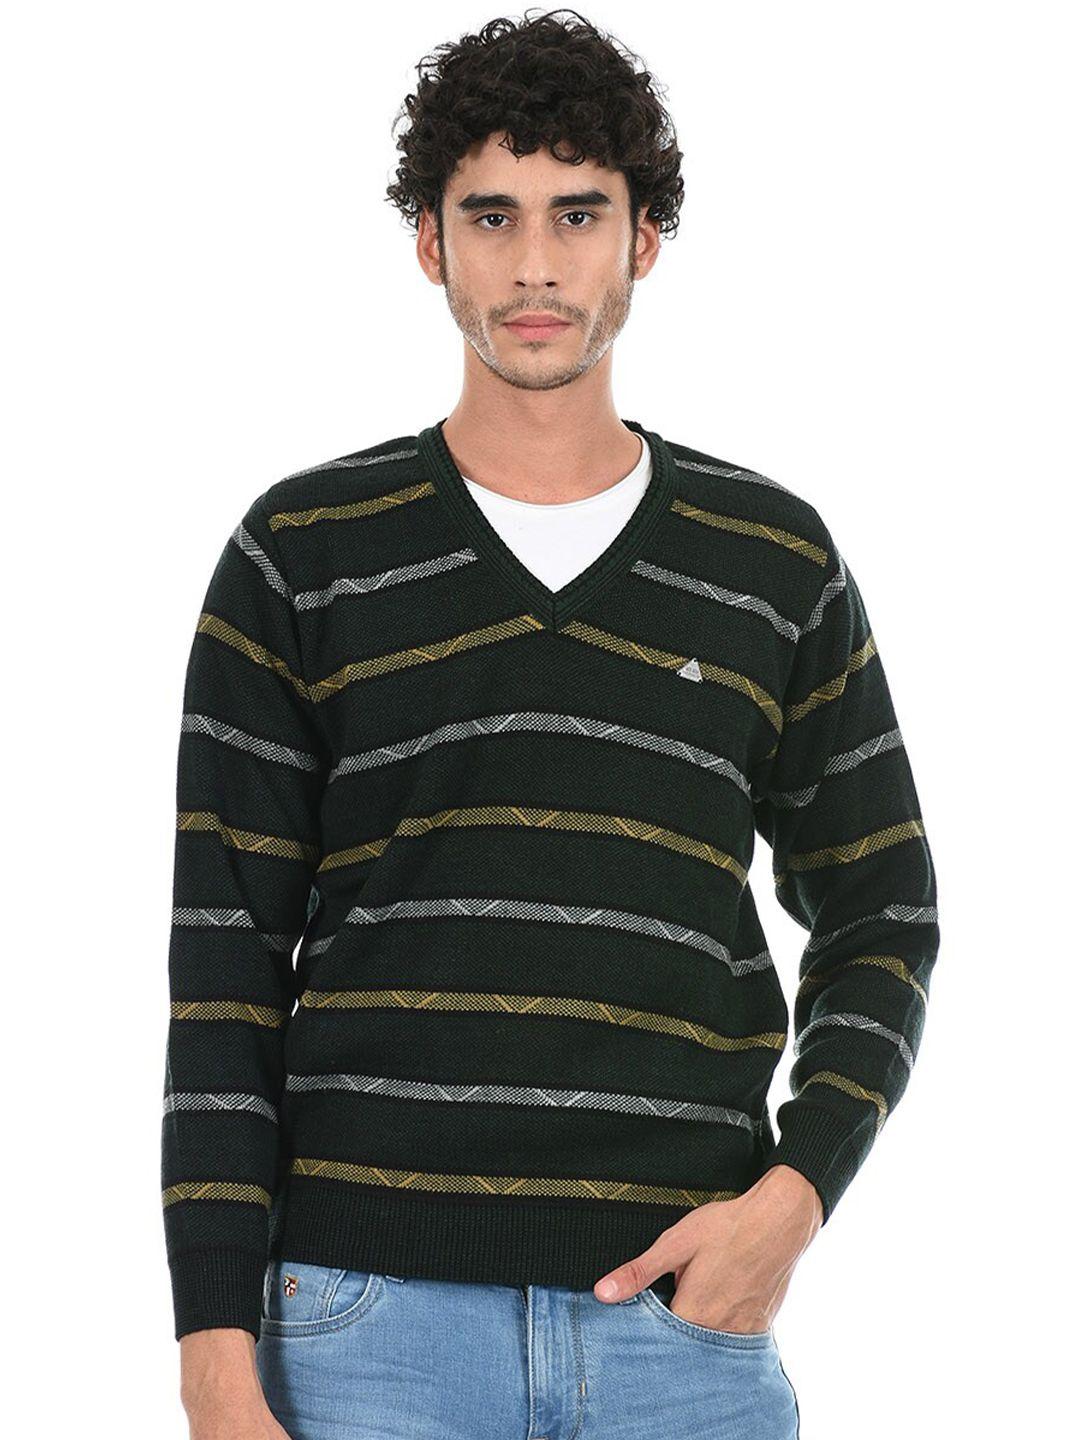 cloak & decker by monte carlo men green & grey striped pullover